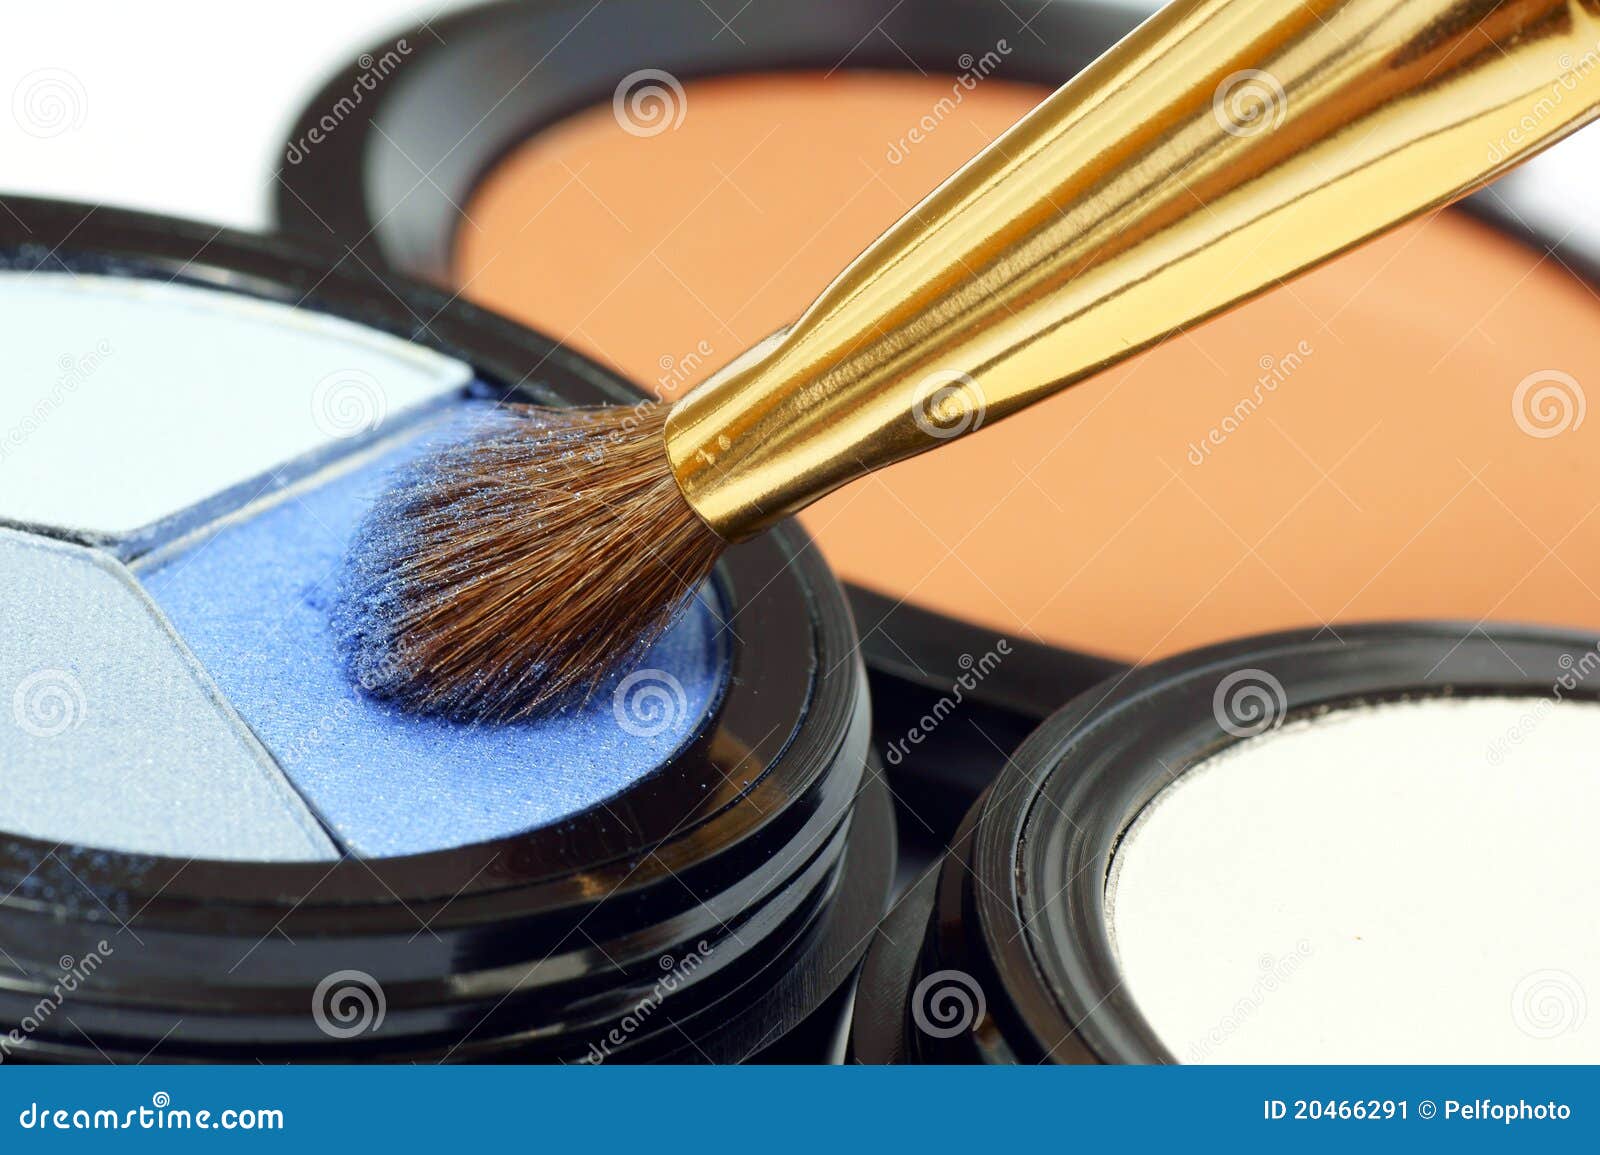 Facial makeup. Applying eye makeup on the brush.